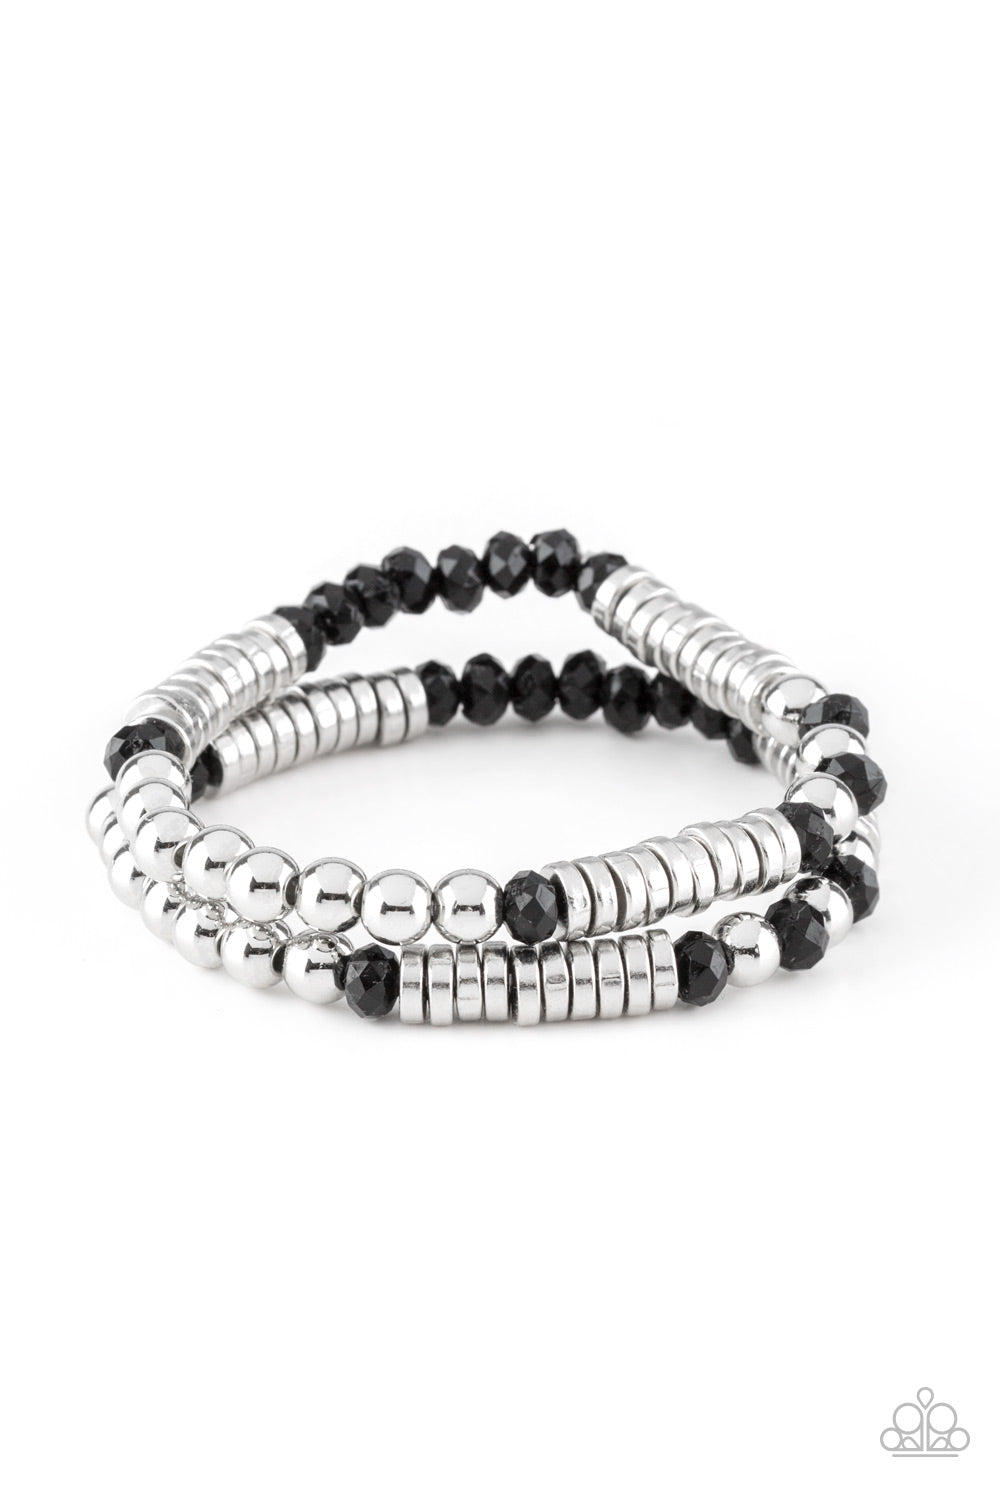 Paparazzi Downright Dressy - Black - and Silver Beads - Stretchy Band Bracelets - $5 Jewelry with Ashley Swint